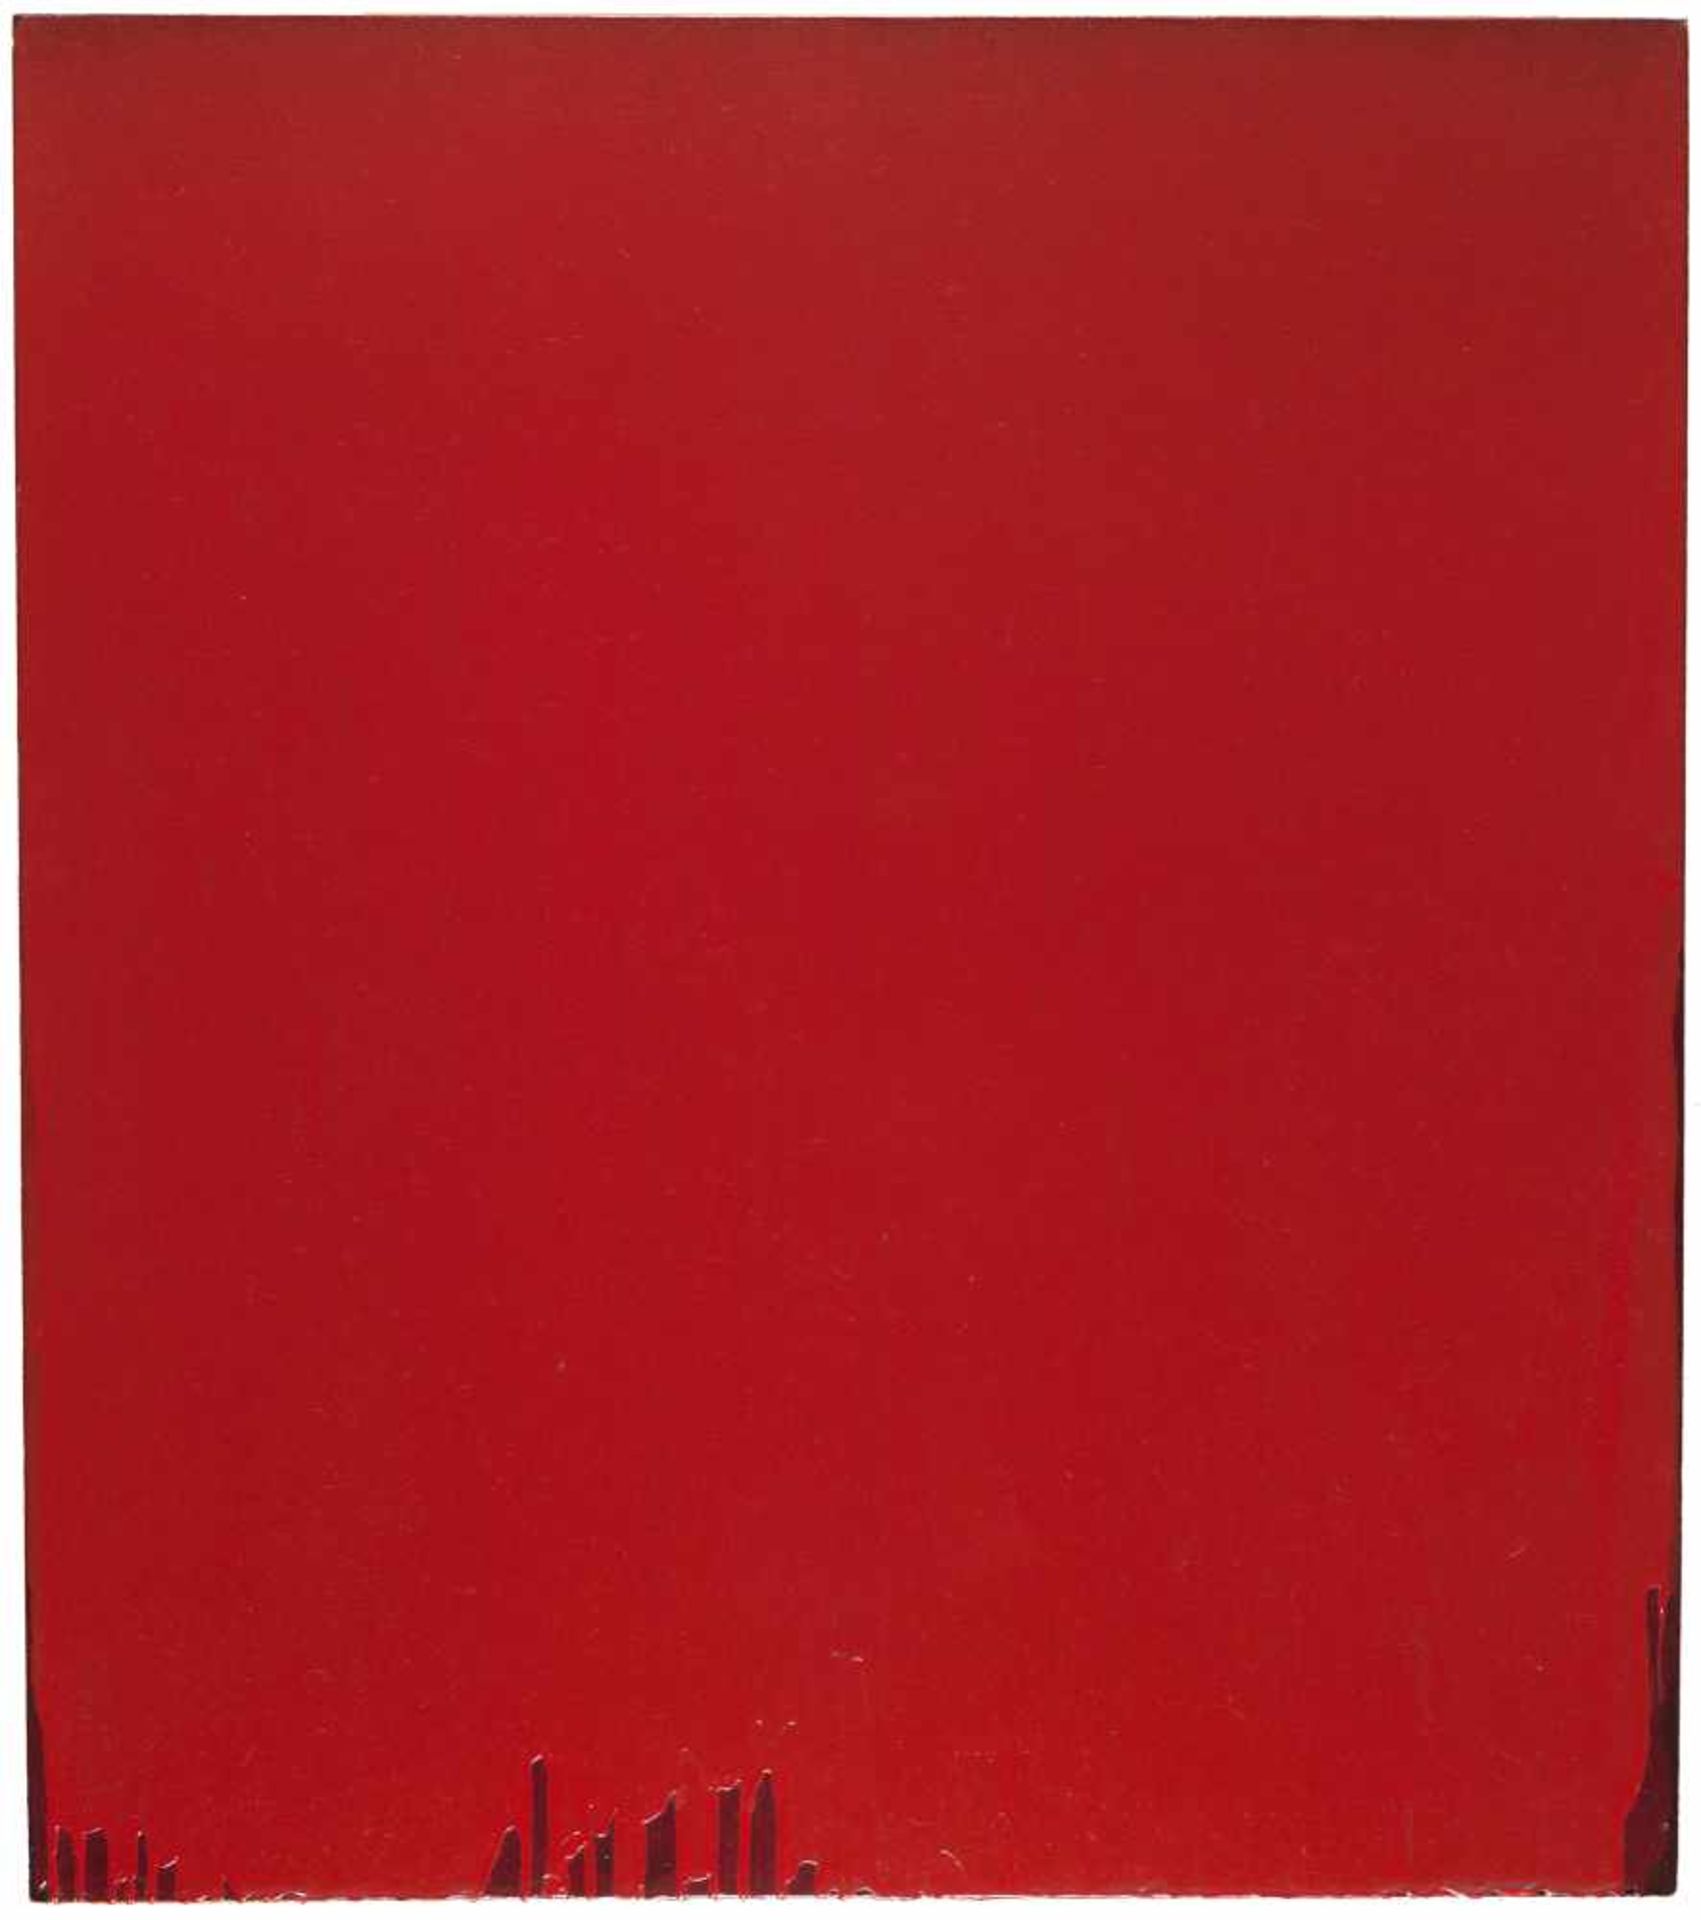 Jospeh Marioni „Red Painting“ Acryl auf Leinwand. (19)92. Ca. 90 x 80 cm. Verso auf der